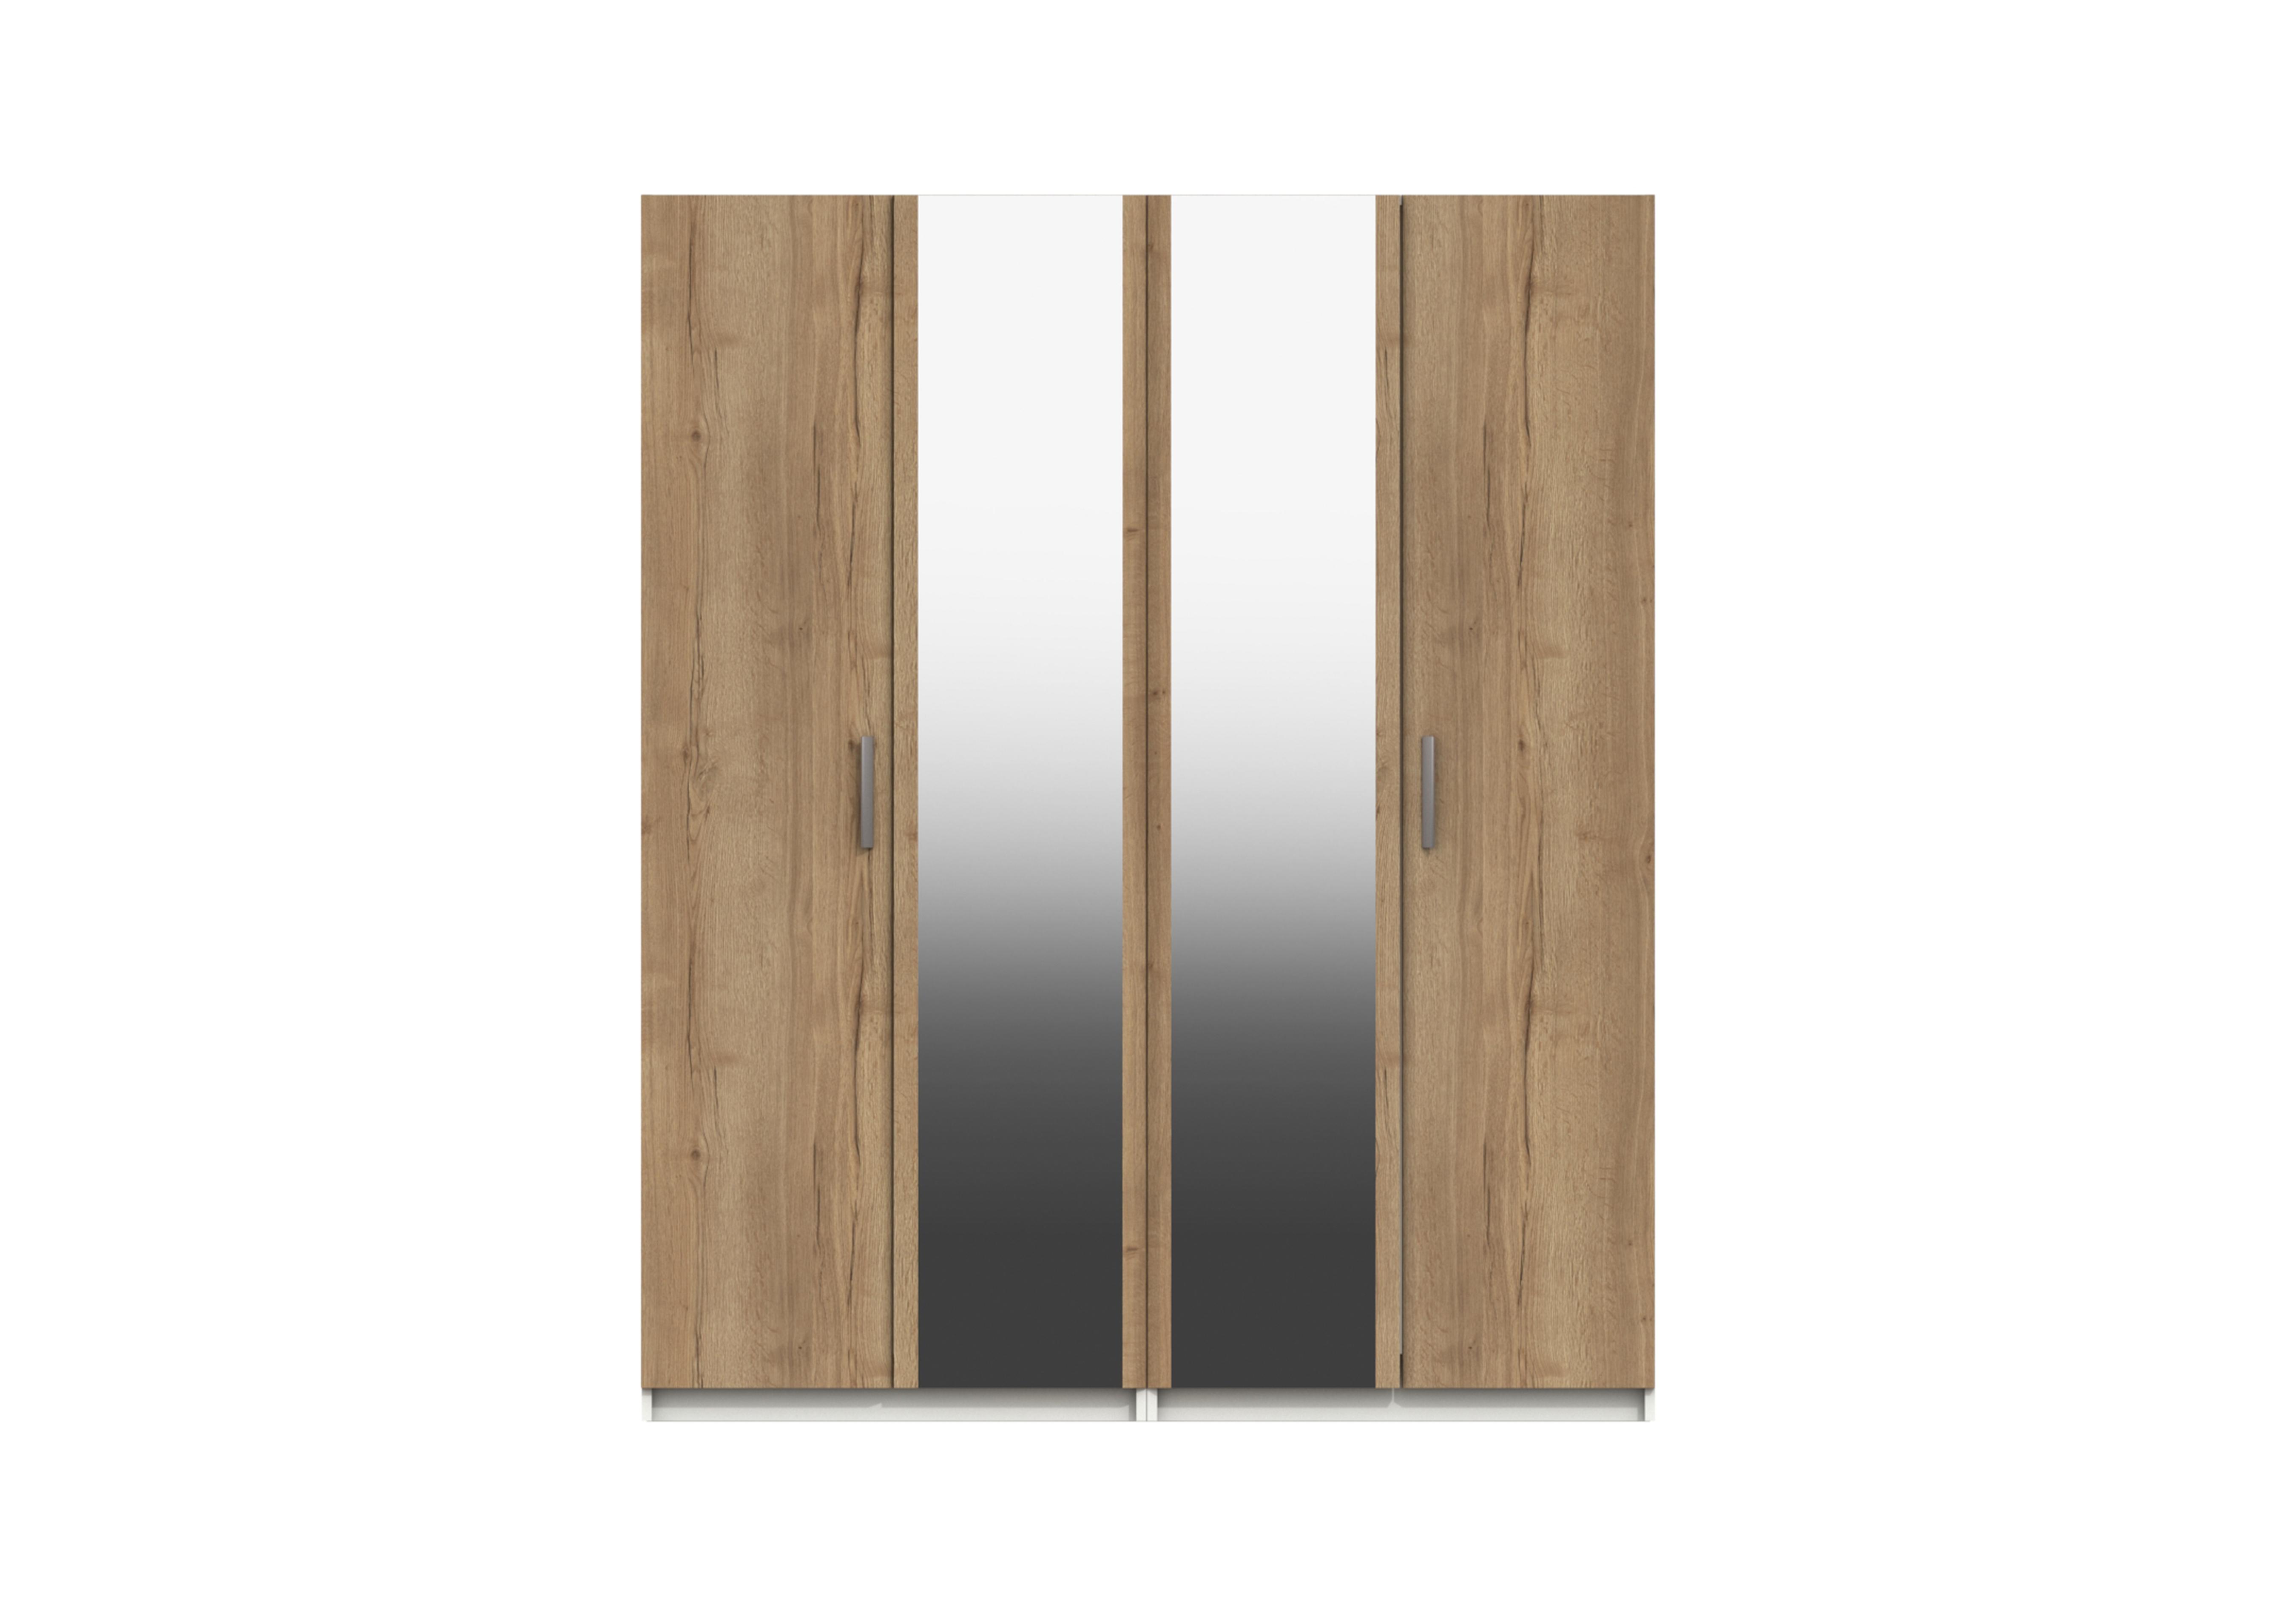 Waterloo 4 Door Wardrobe with 2 Mirrors in White & Natural Rustic Oak on Furniture Village